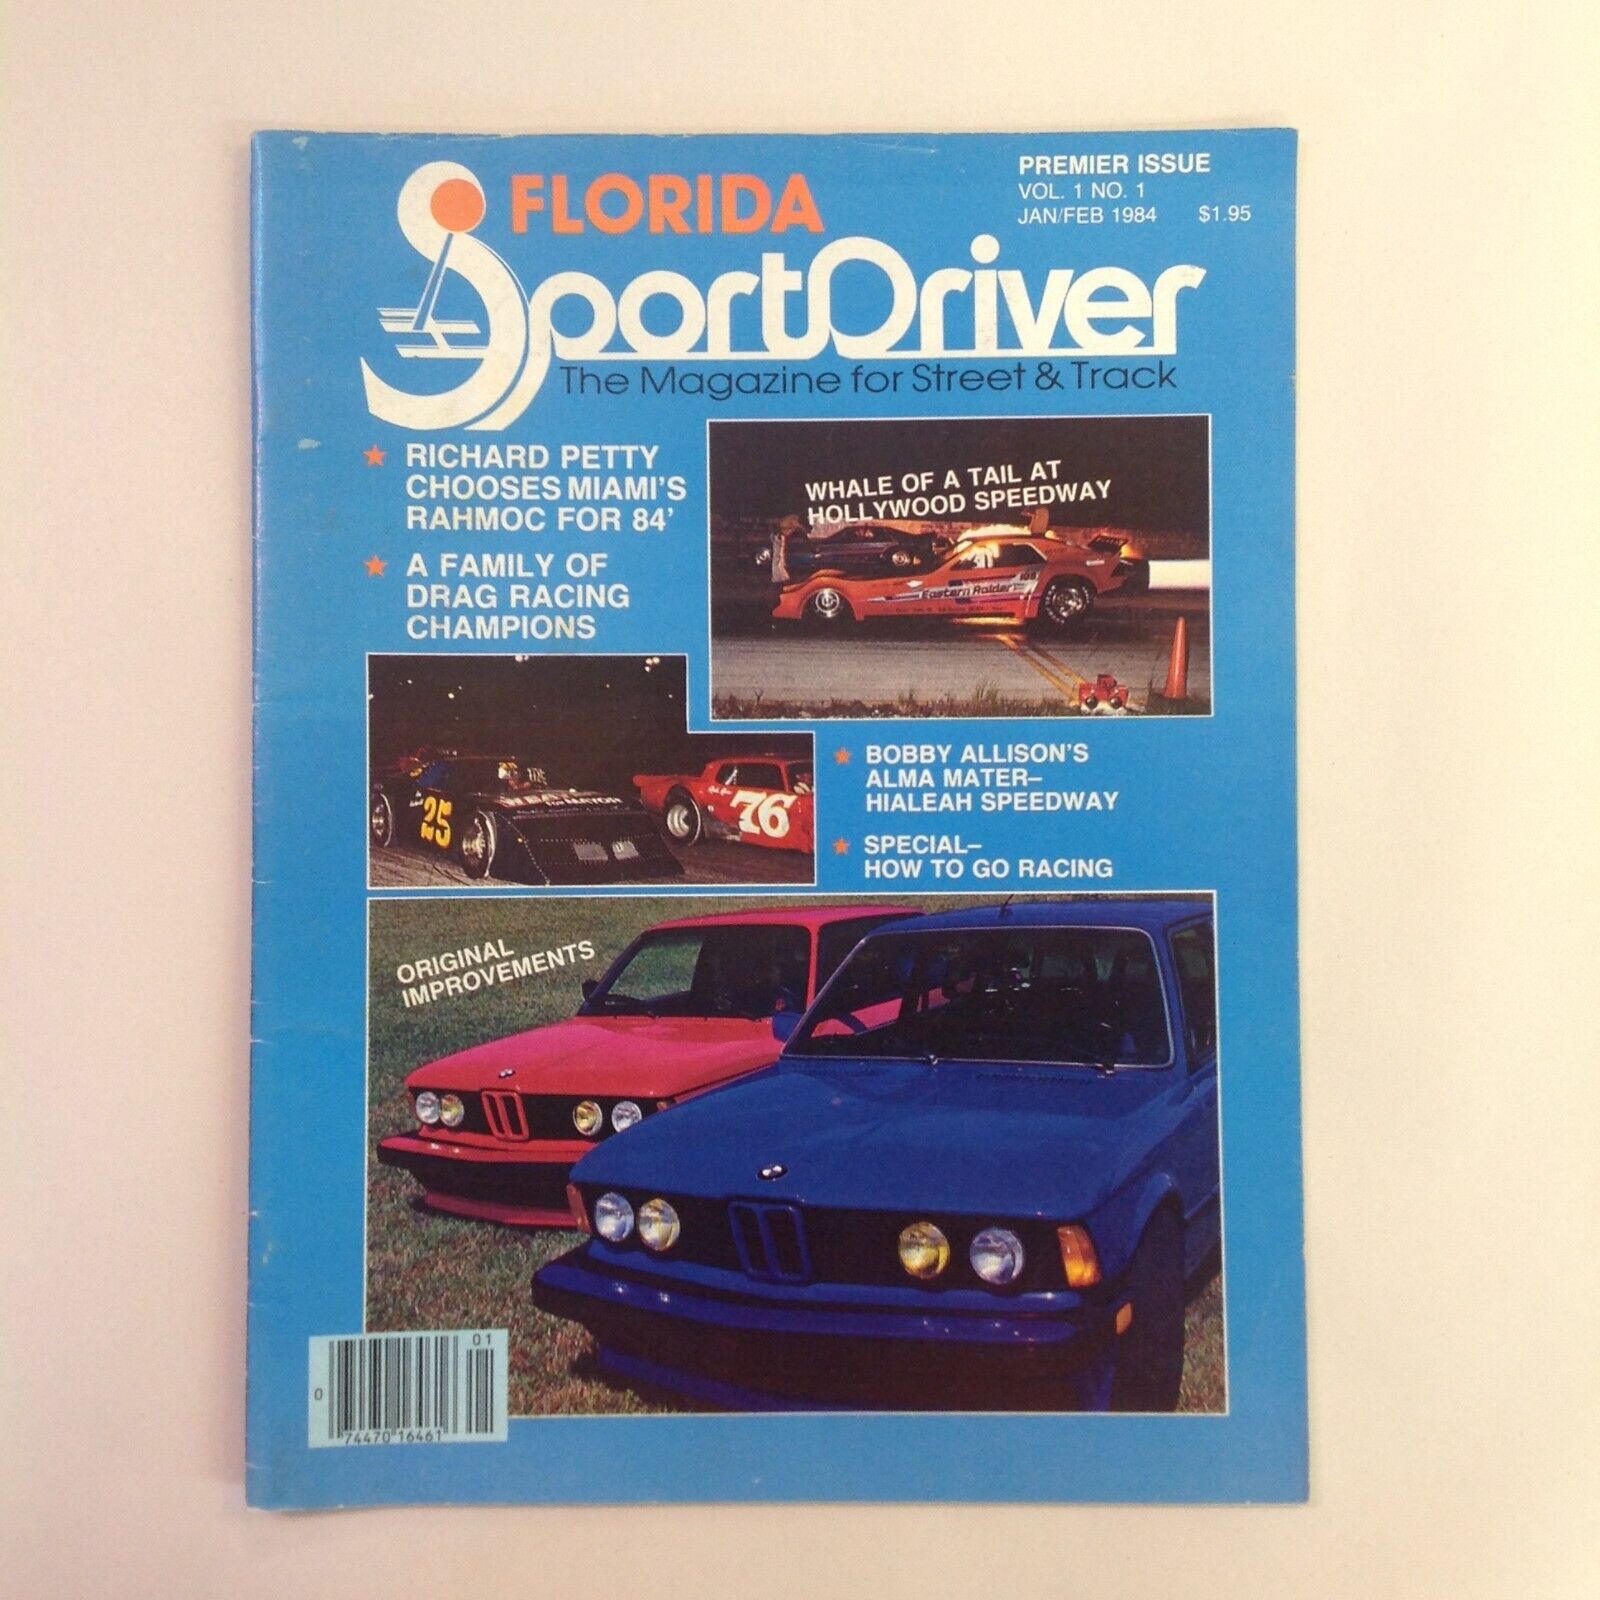 Vintage Jan/Feb 1984 Florida Sport Driver Magazine for Motorsports Premier Issue